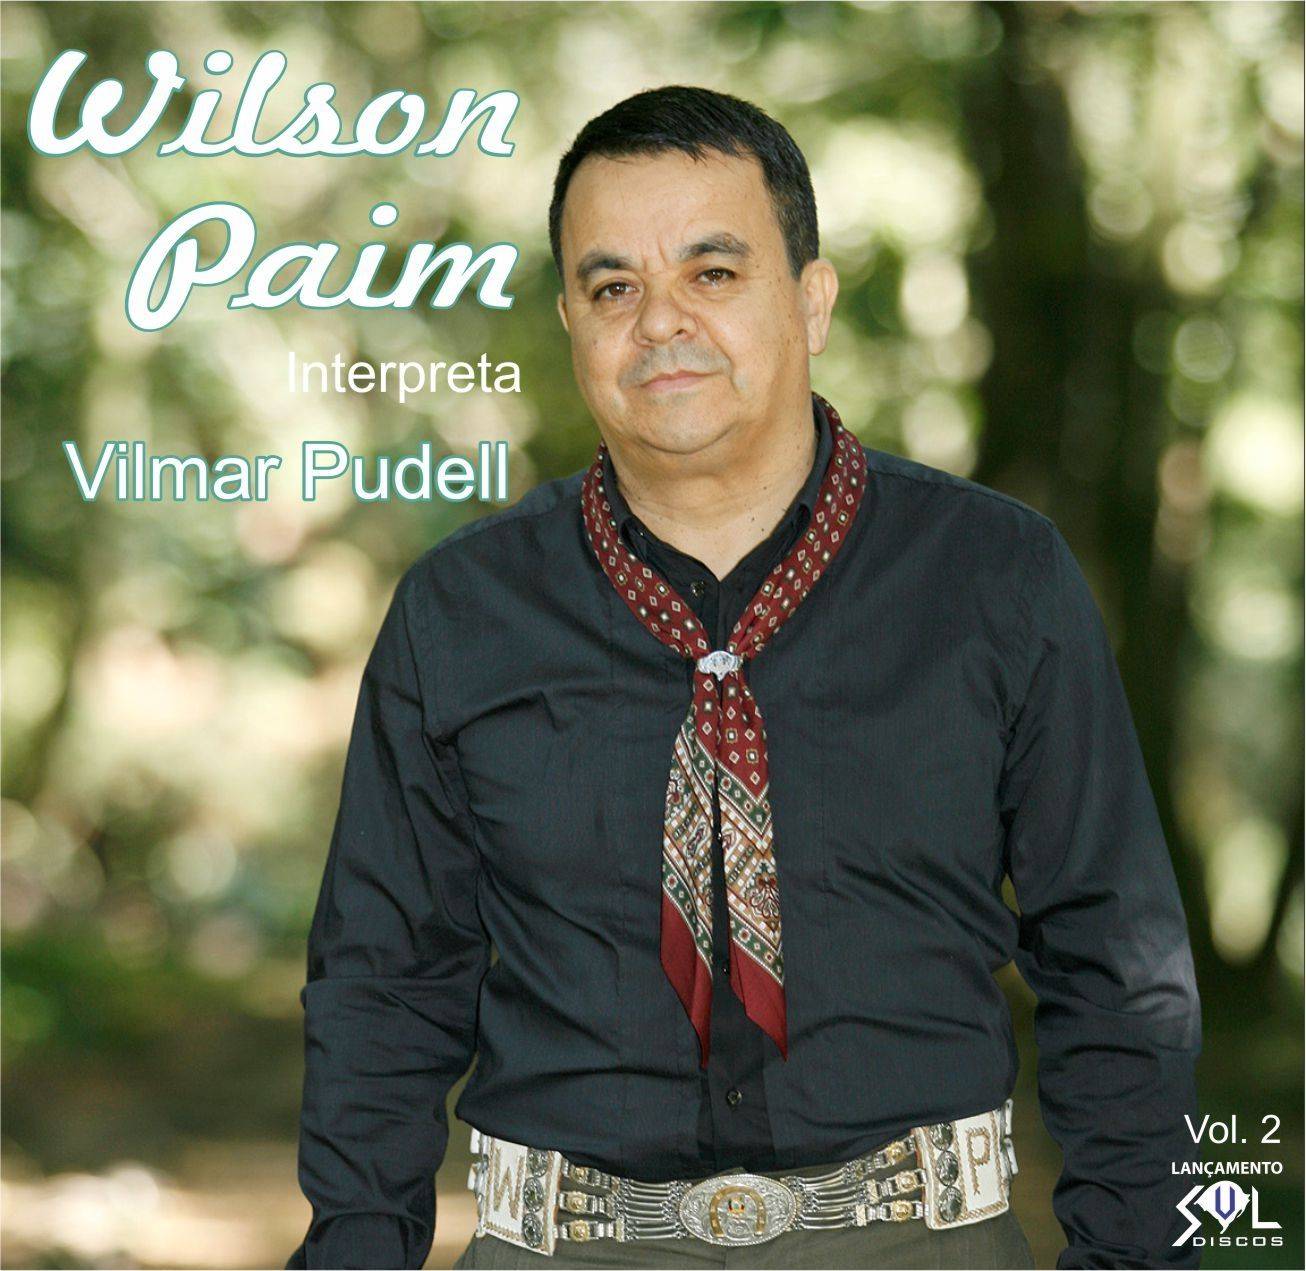 Wilson Paim Interpreta Vilmar Pudell Vol. 02